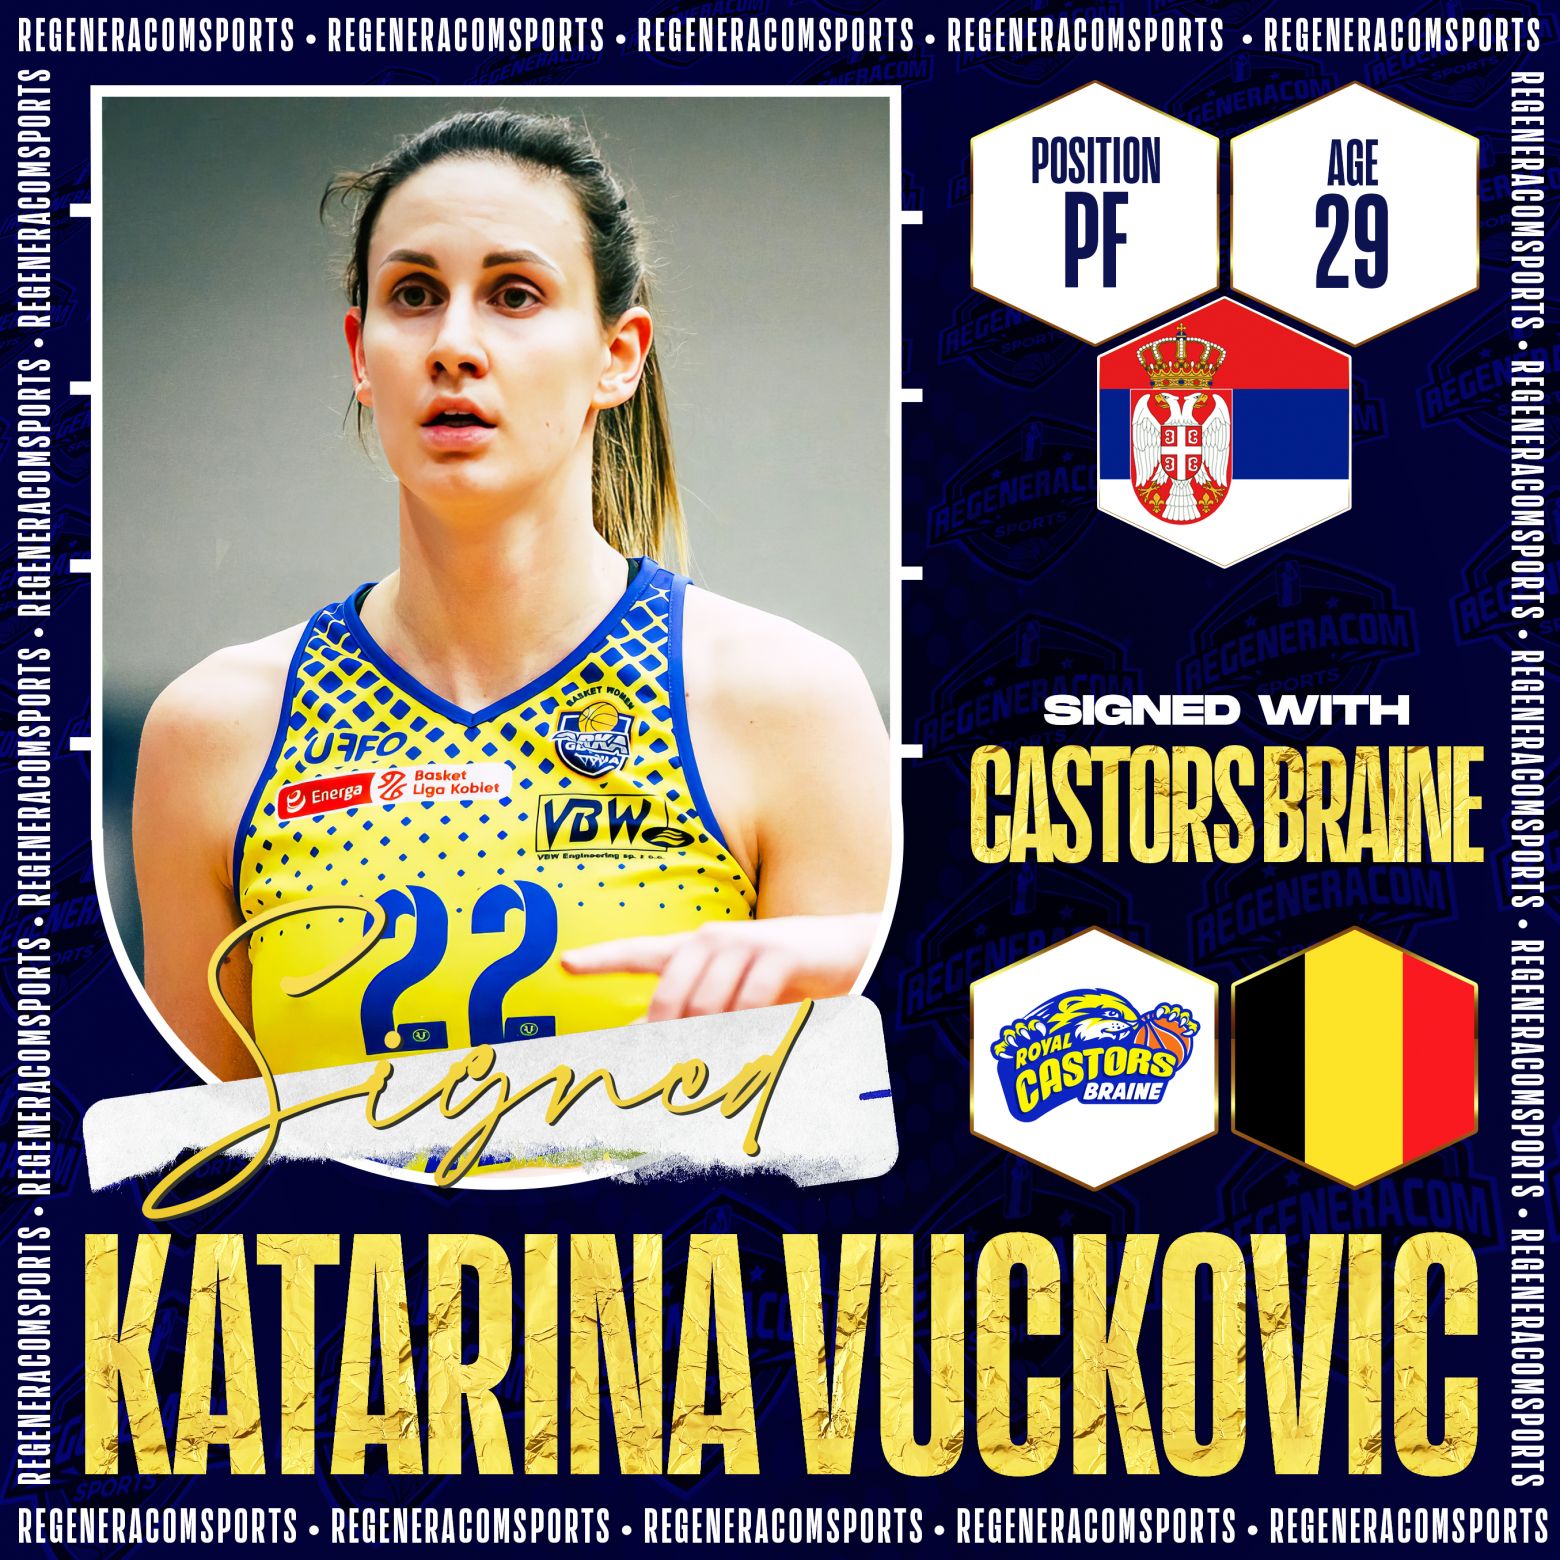 KATARINA VUCKOVIC has signed with Castors Braine for the 2023/24 season